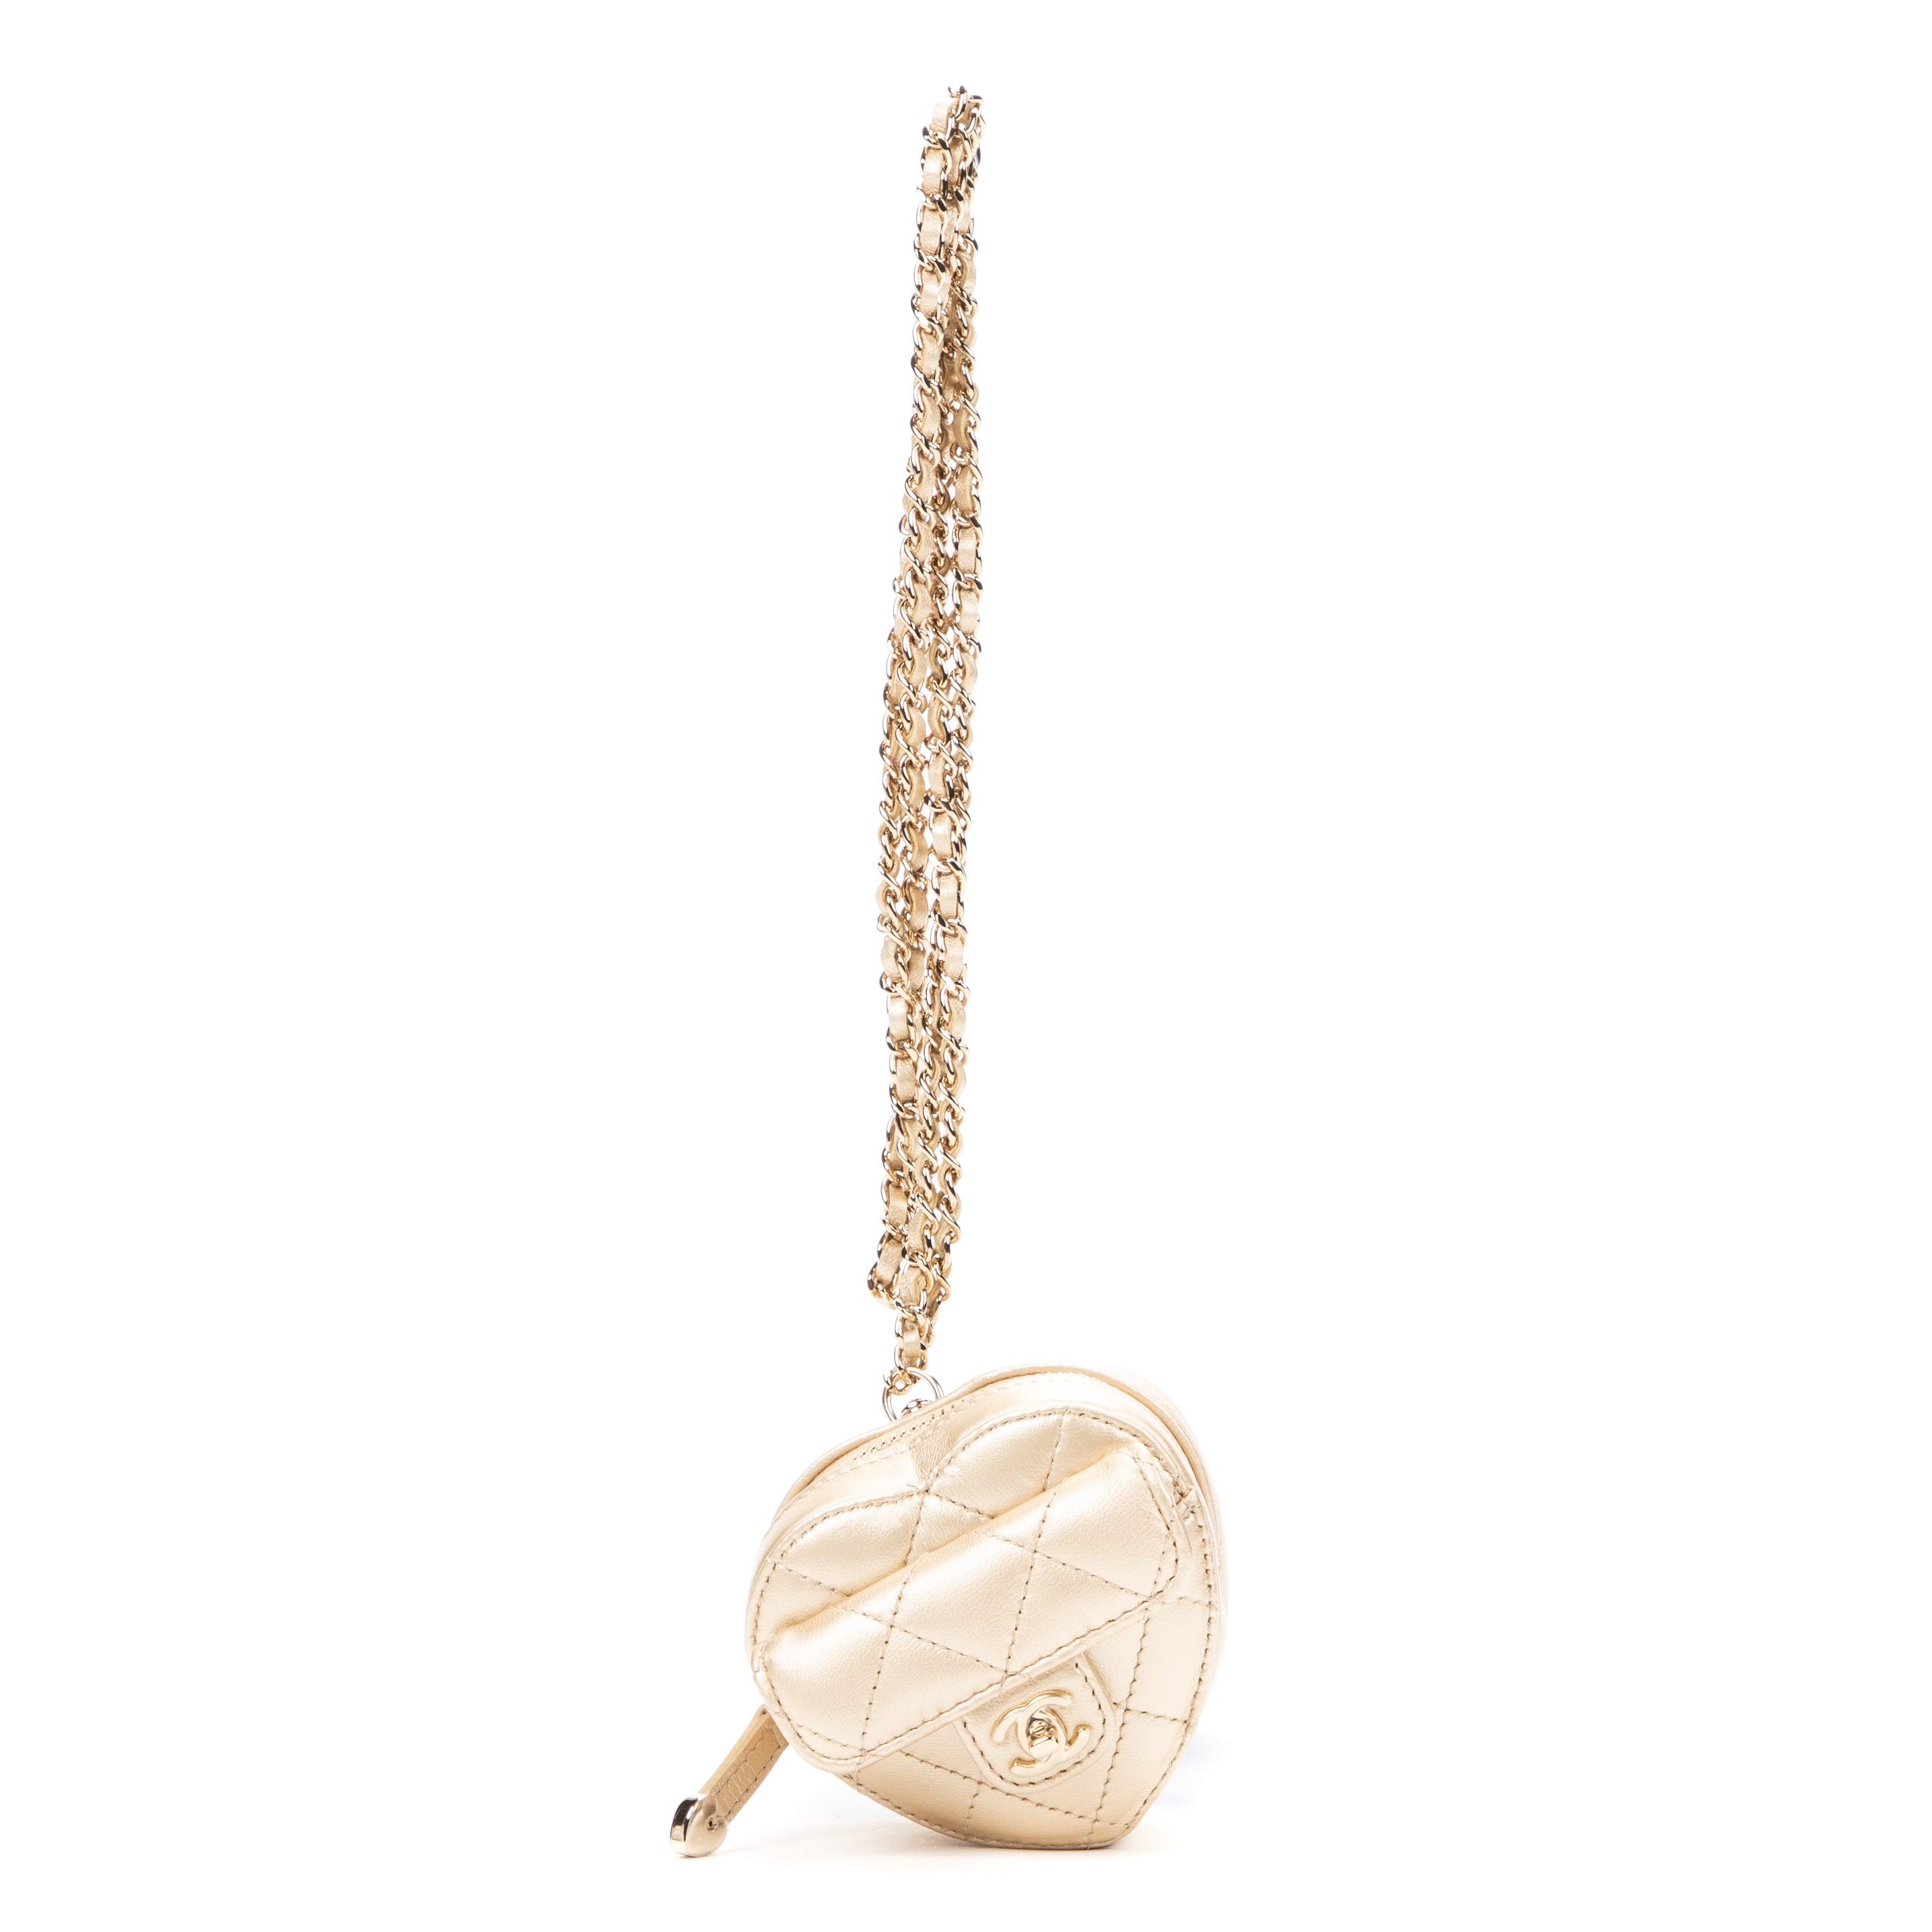 Chanel Rare Heart Clutch With Chain Mini in Metallic